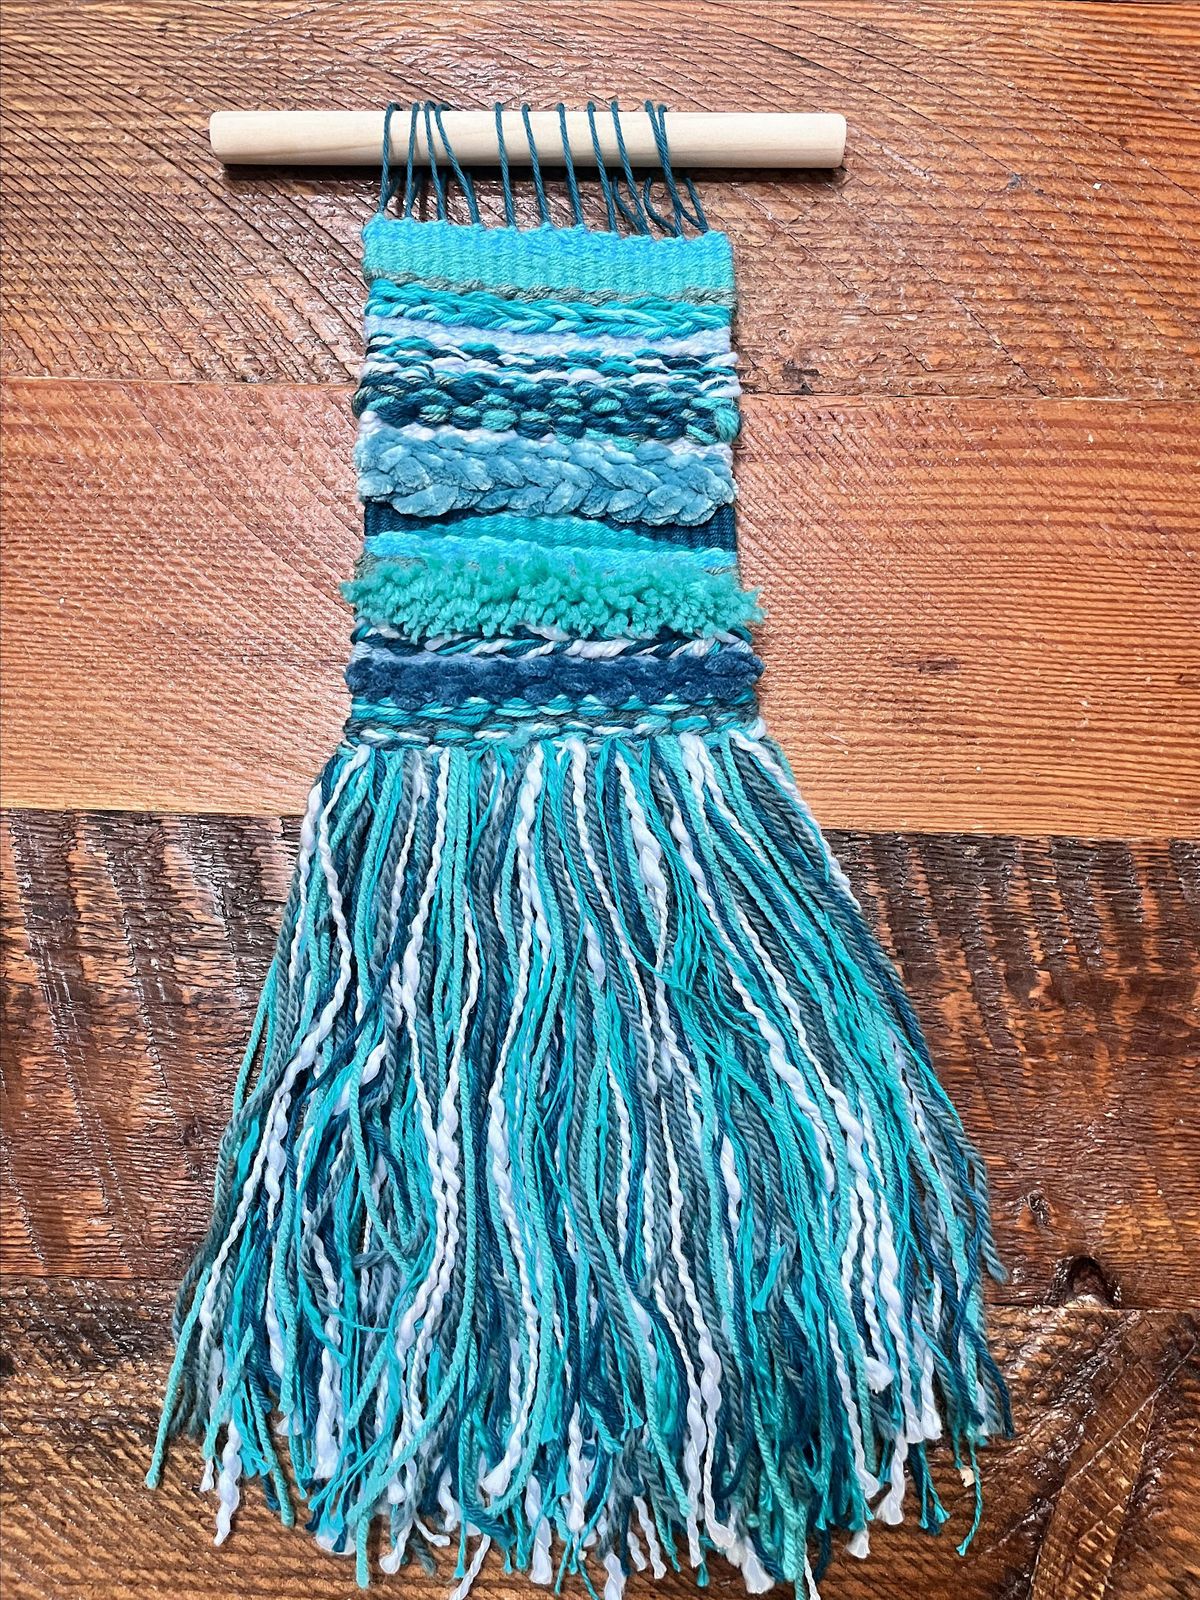 Ocean Blue Themed 1 Day Weaving Workshop